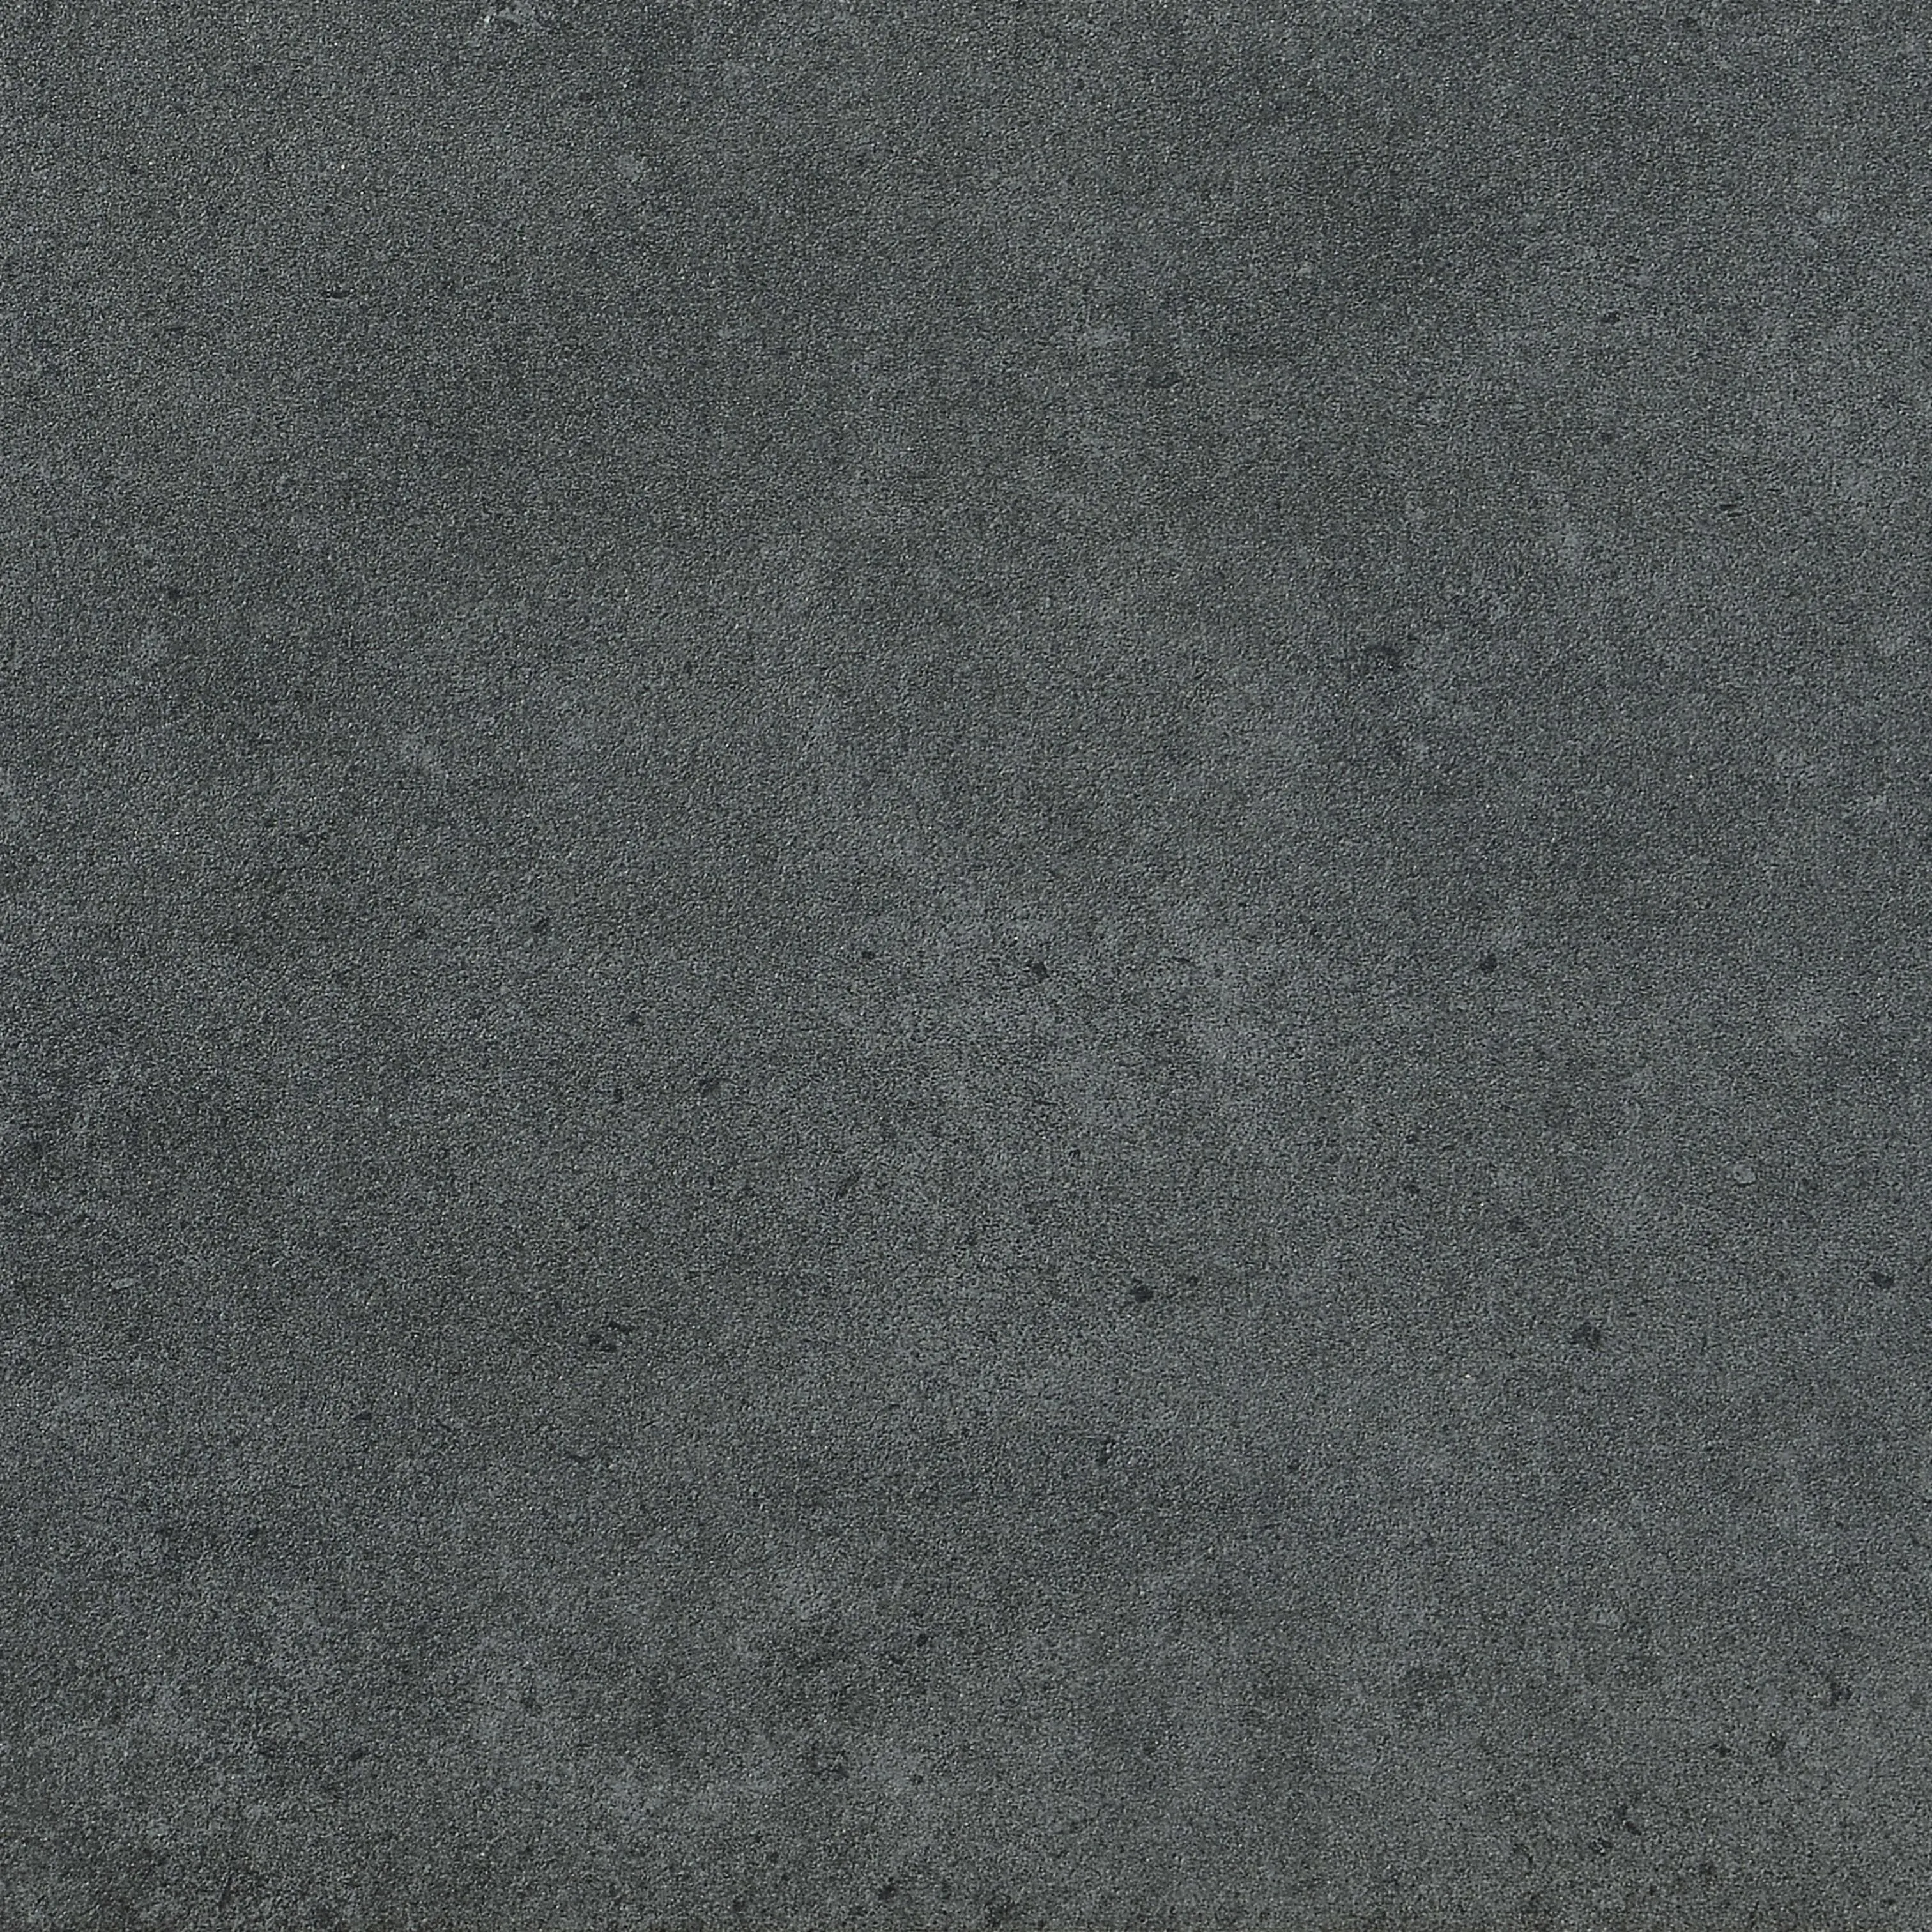 RAK Surface 2.0 Ash Lapatto Tiles - 600 x 600mm